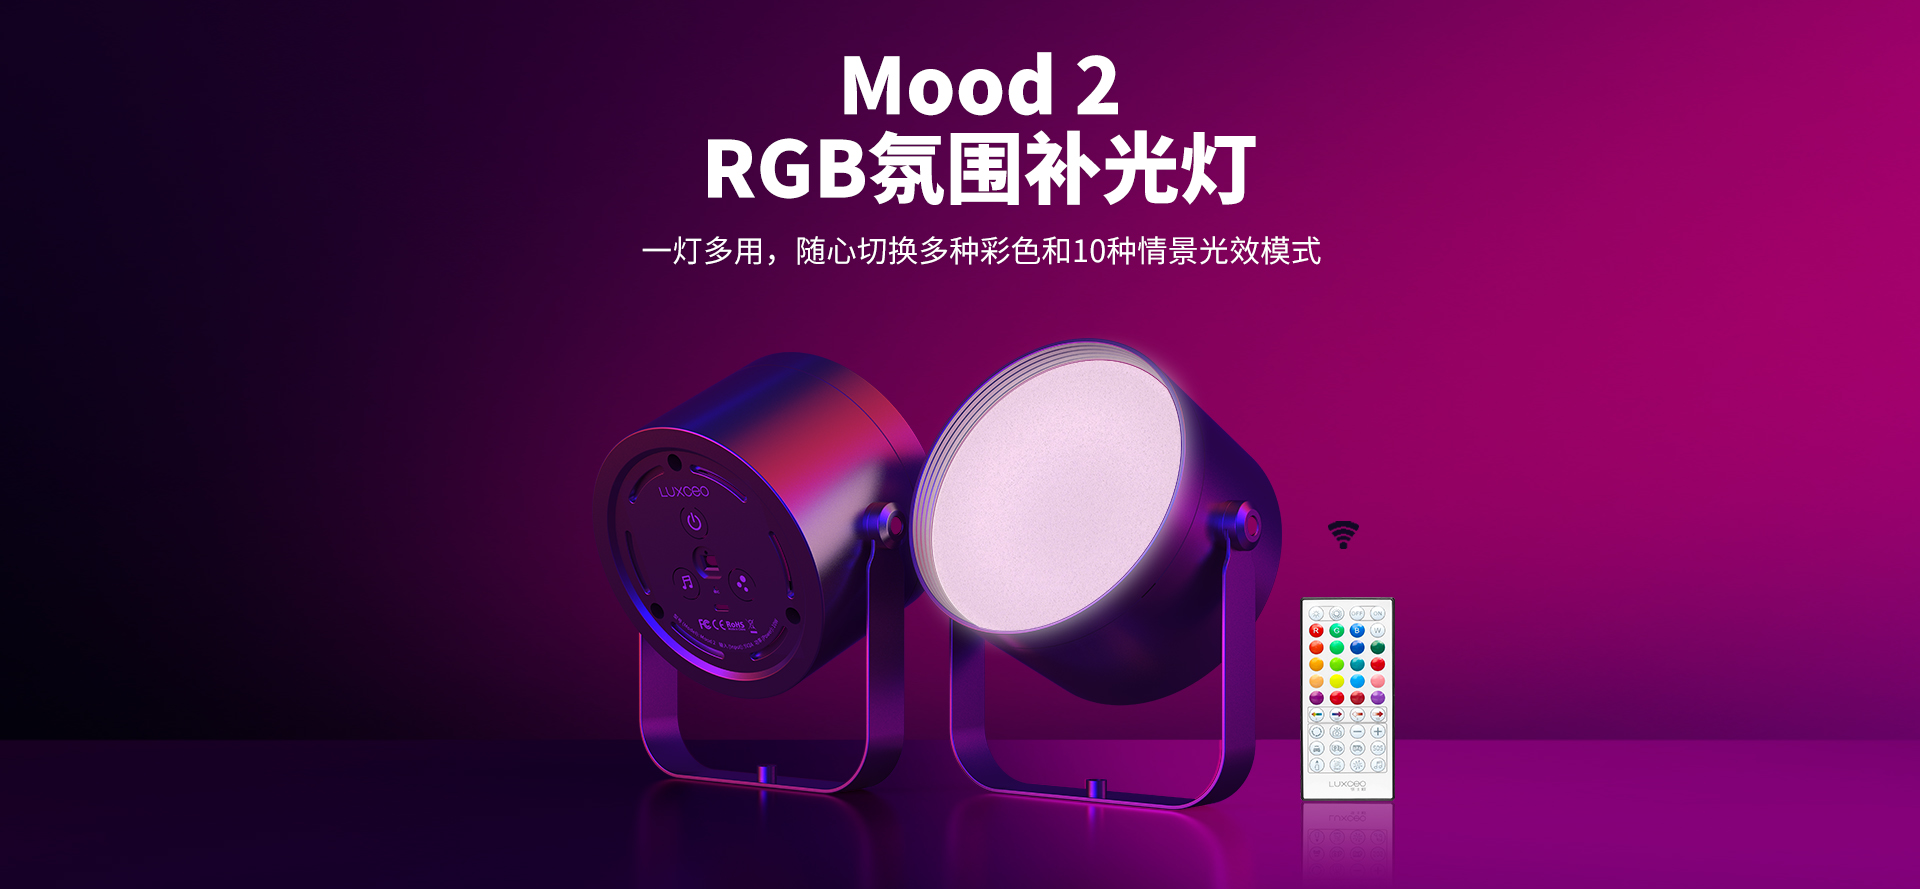 Mood2-RGB氛围补光灯